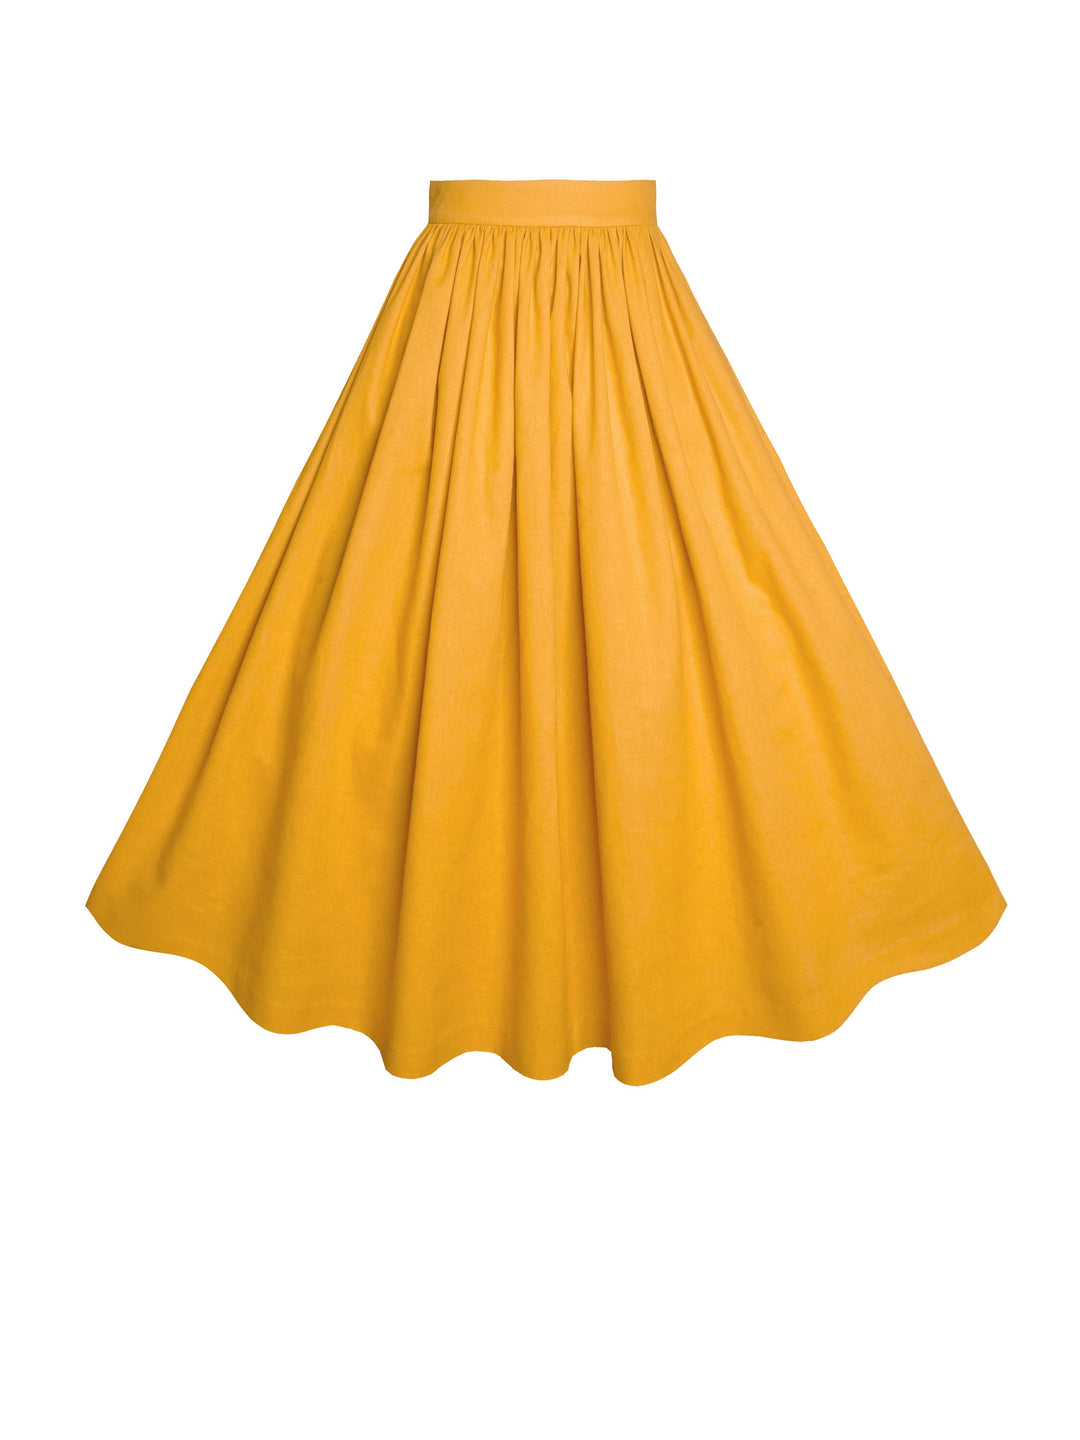 MTO - Lola Skirt in Tuscany Yellow Linen